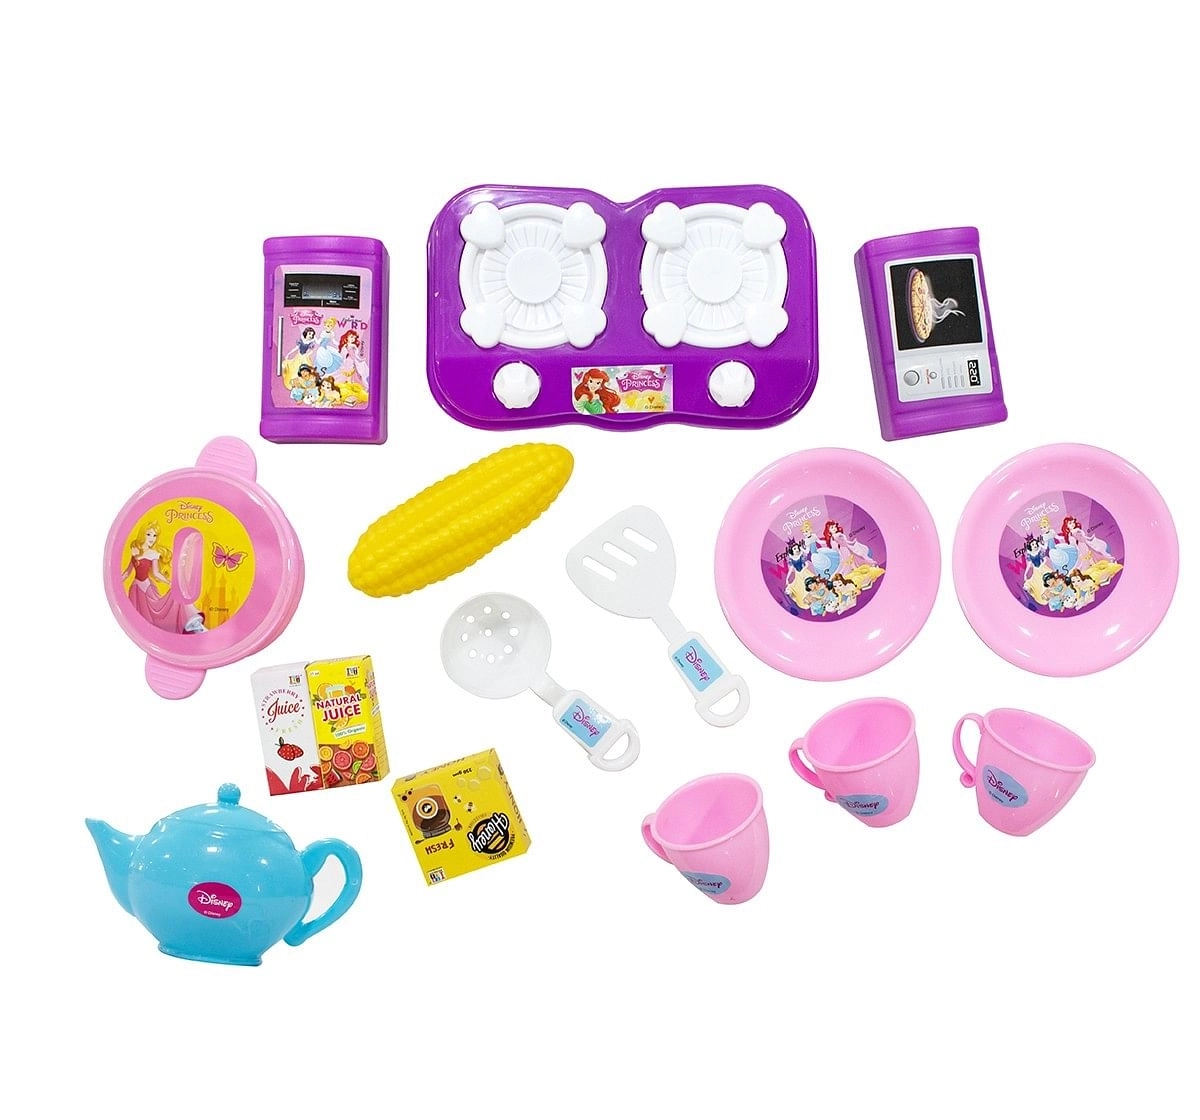 Disney Princess Kitchen set of 16 pcs. role play toys for kids, 3Y+